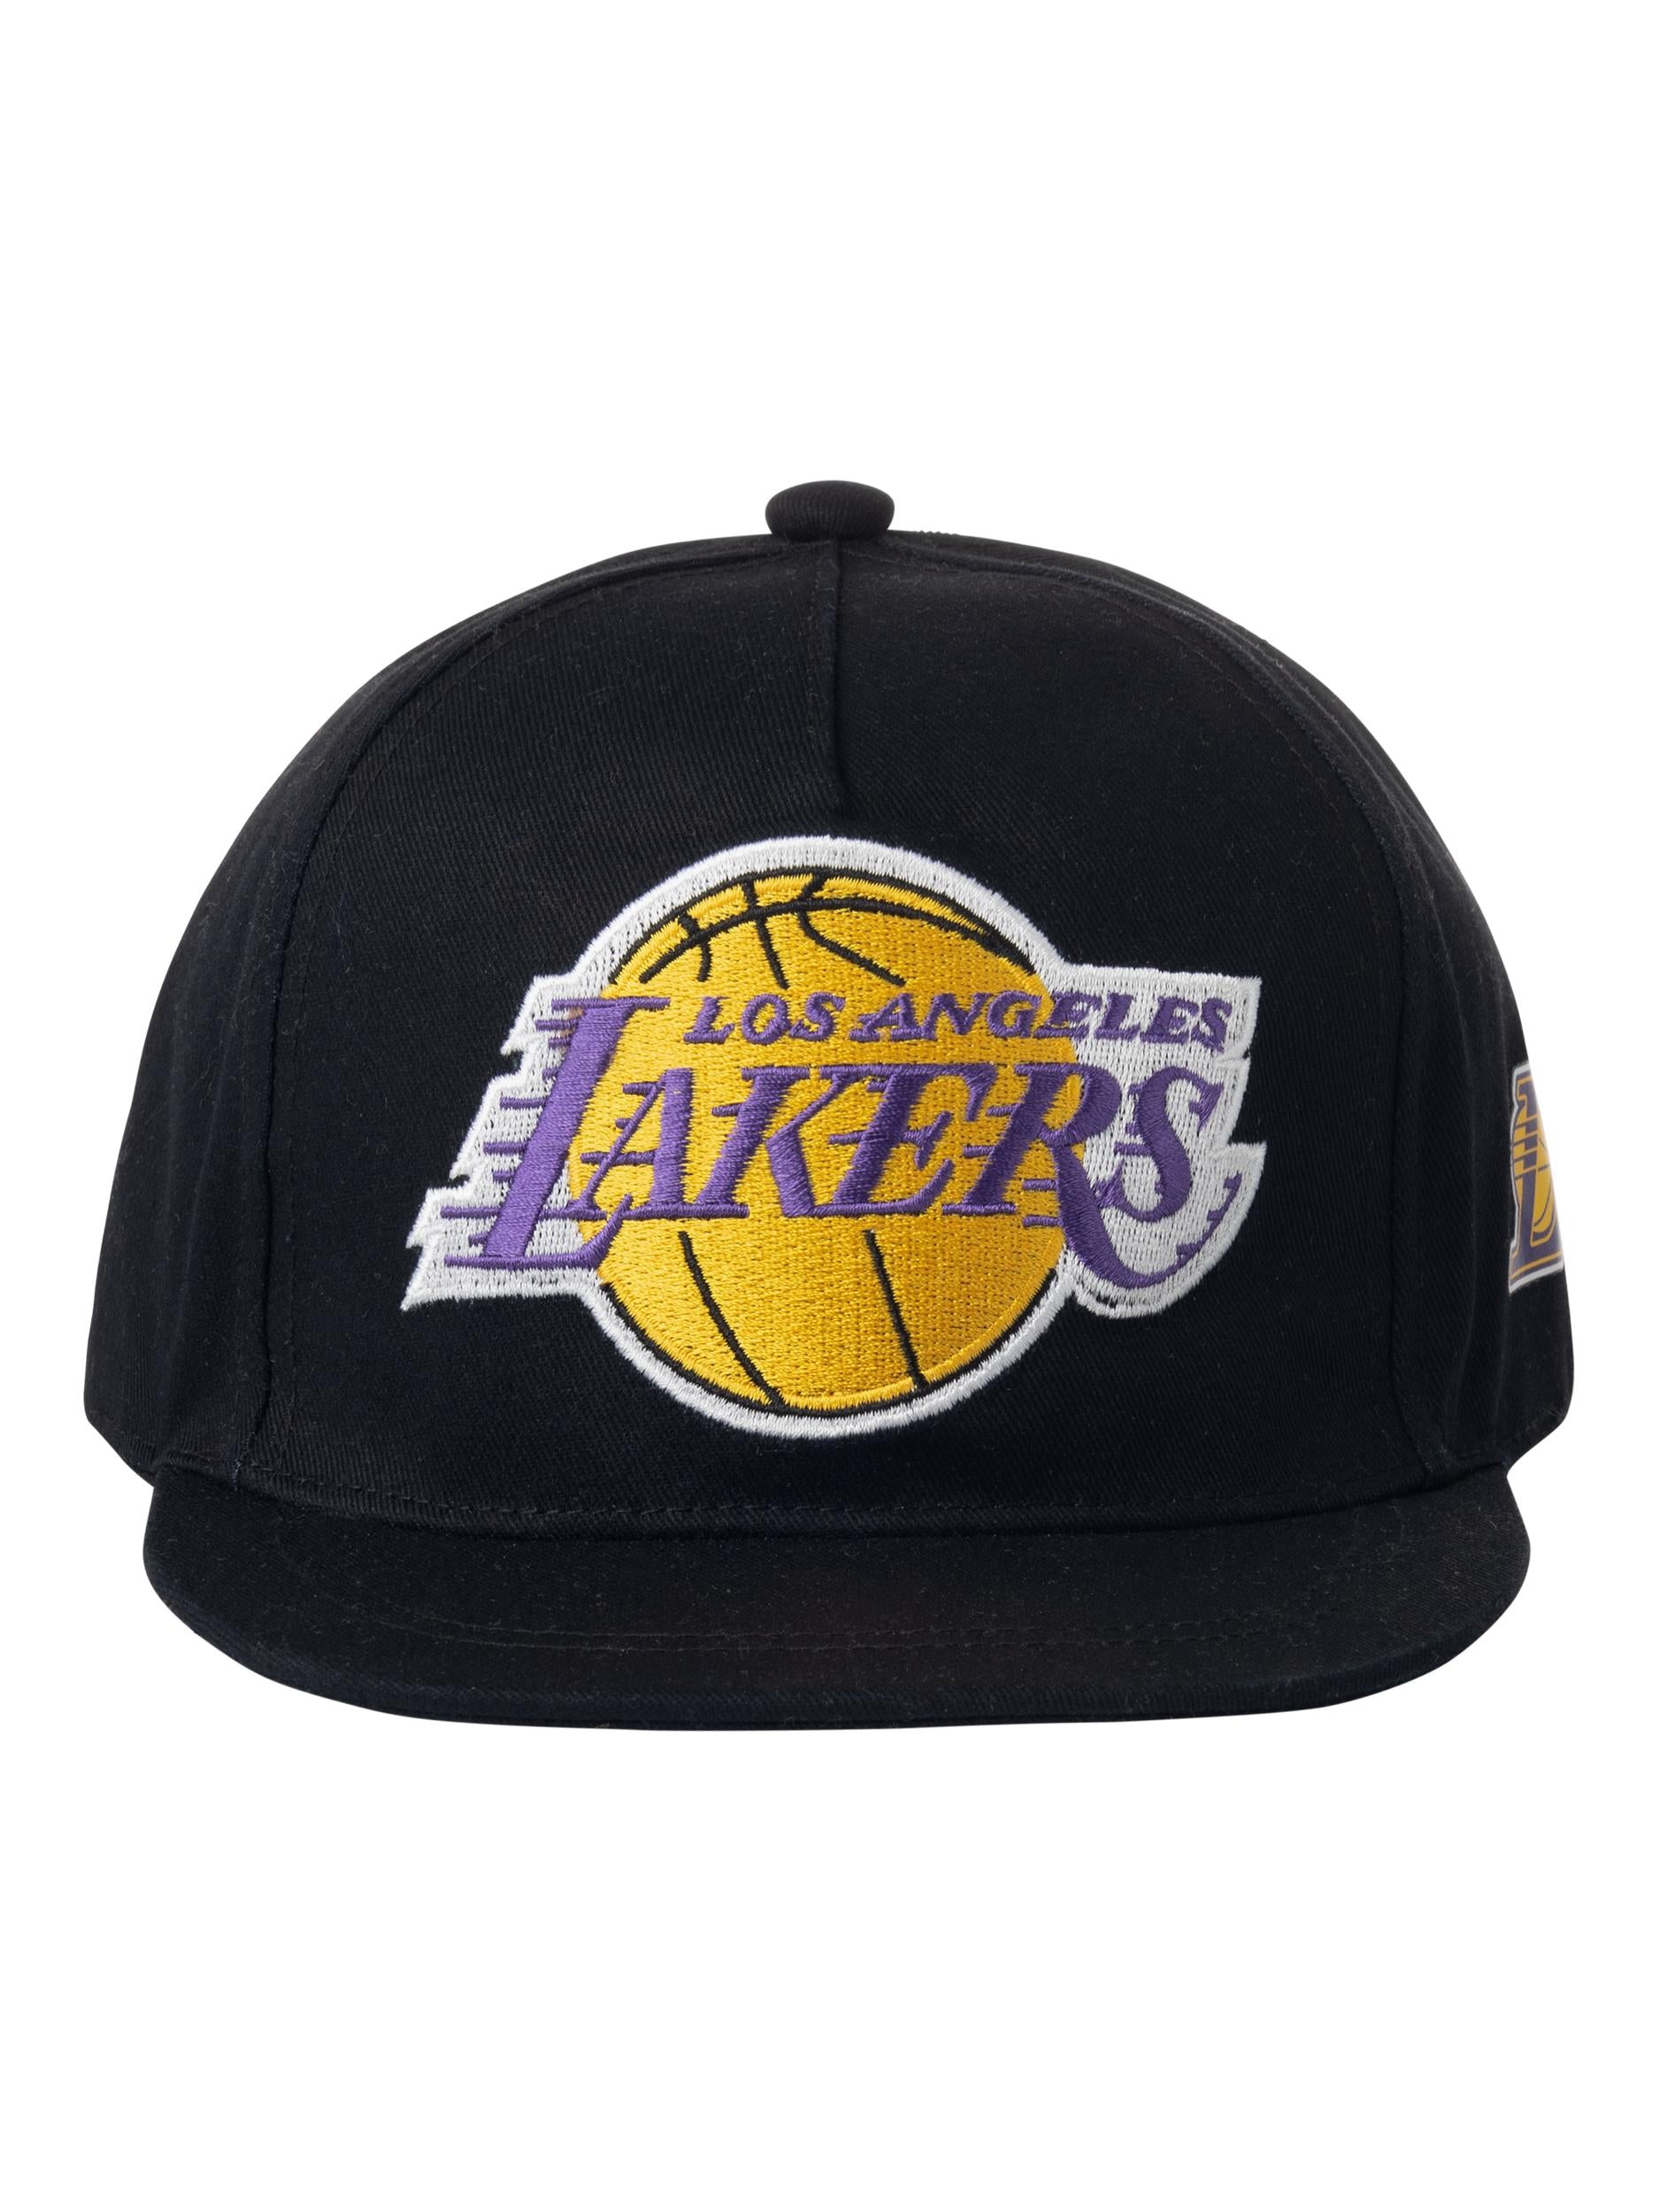 Name It cappello kids nero Lakers